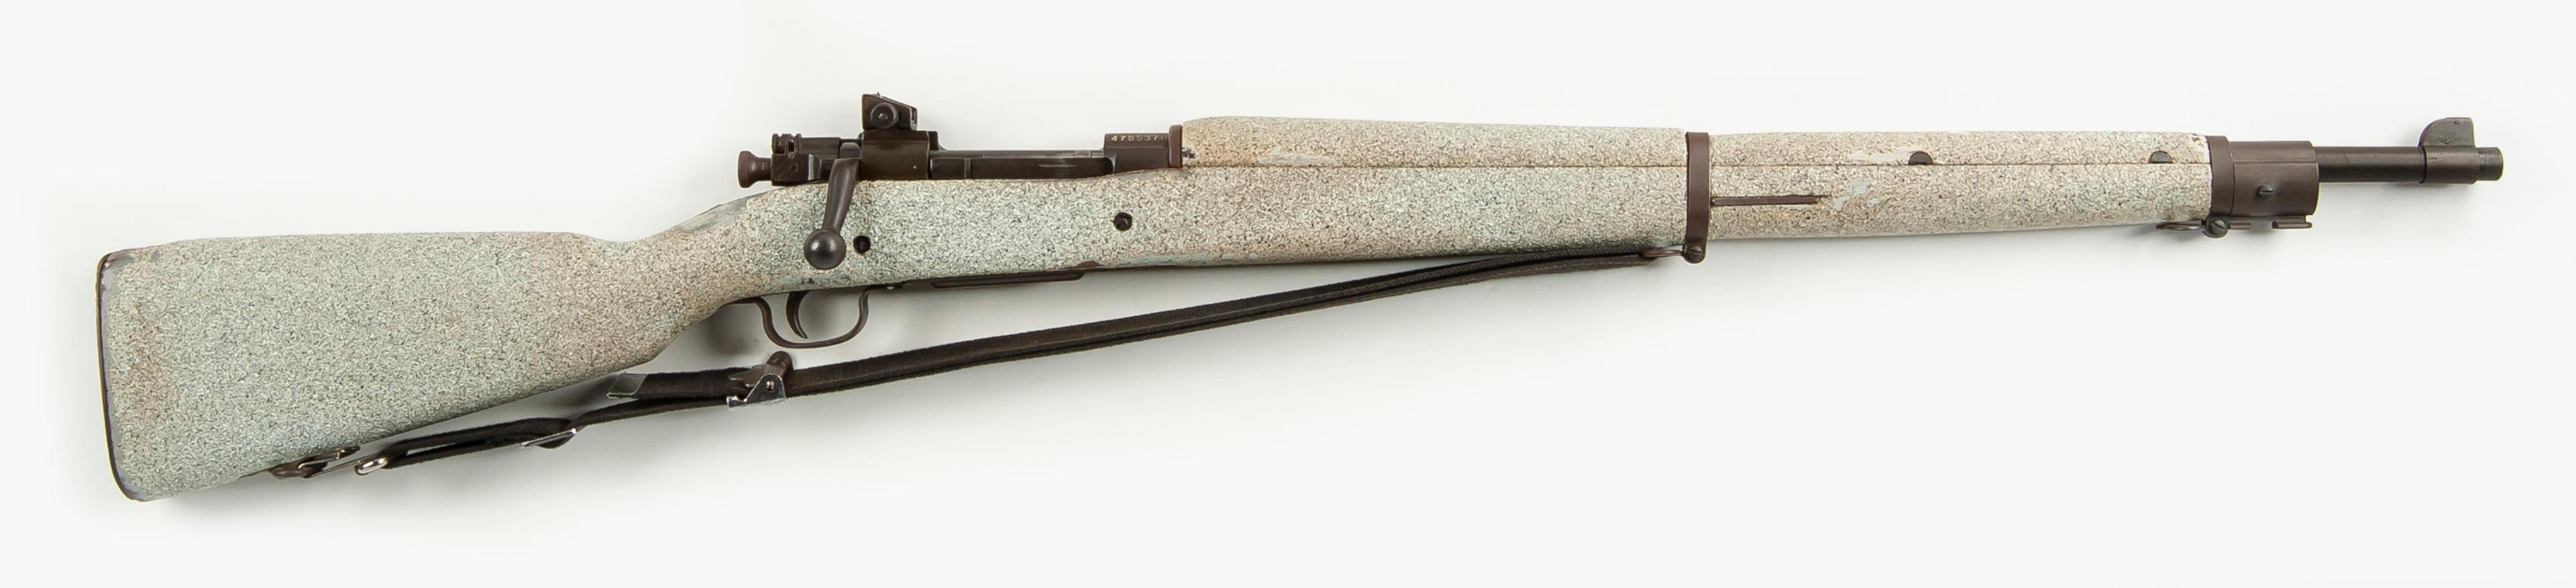 M1903-A3 Parade Rifle by Smith Corona